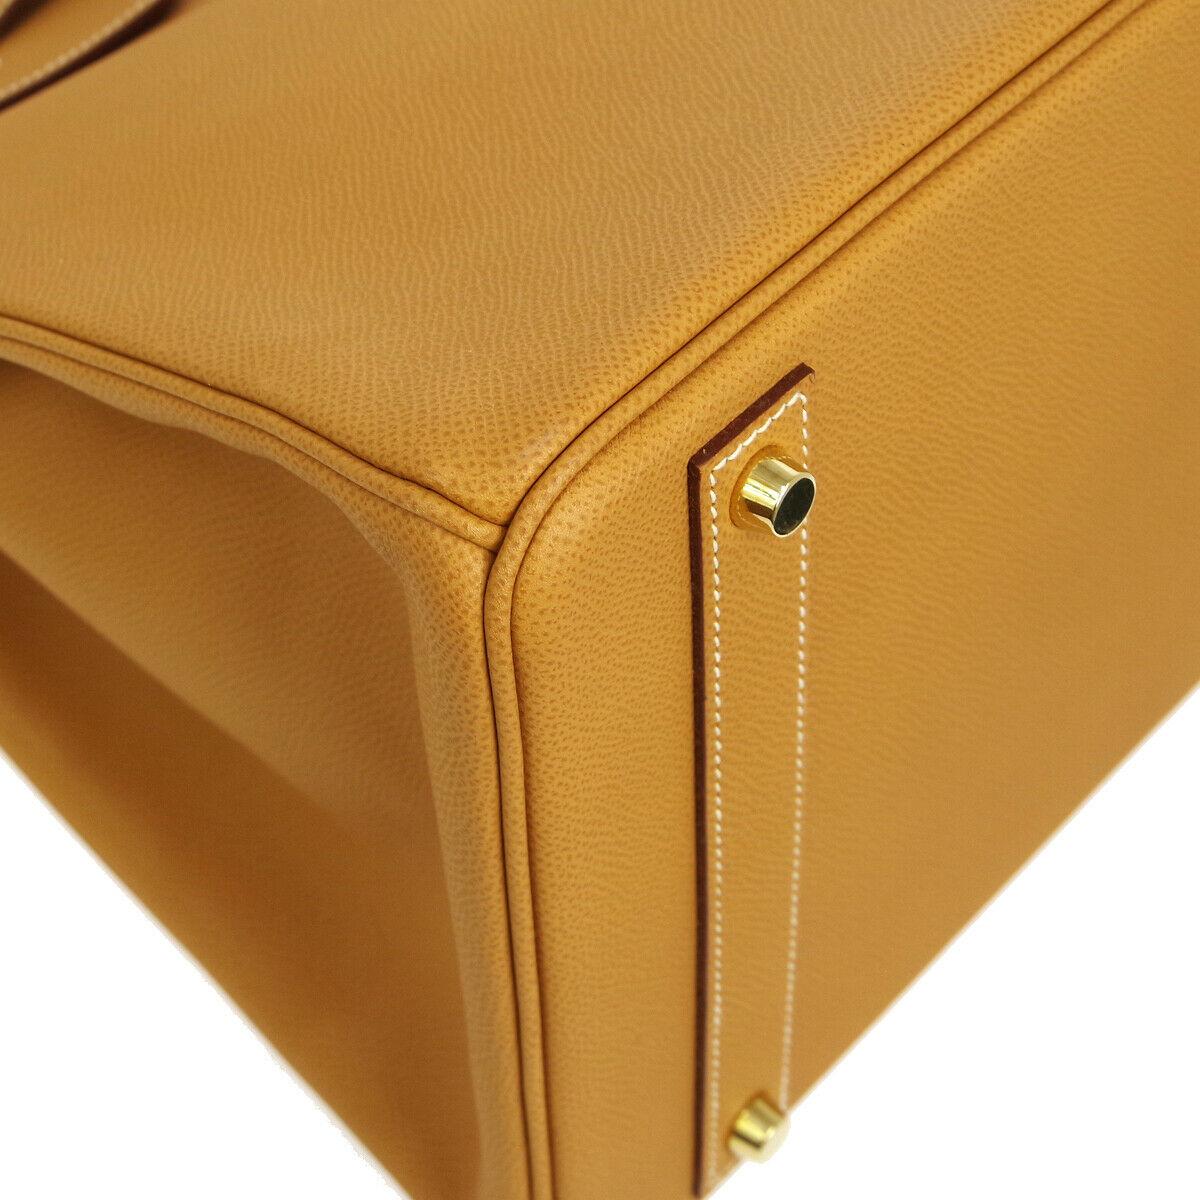 Women's Hermes Birkin 40 Cognac Leather Gold Travel Carryall Top Handle Satchel Tote